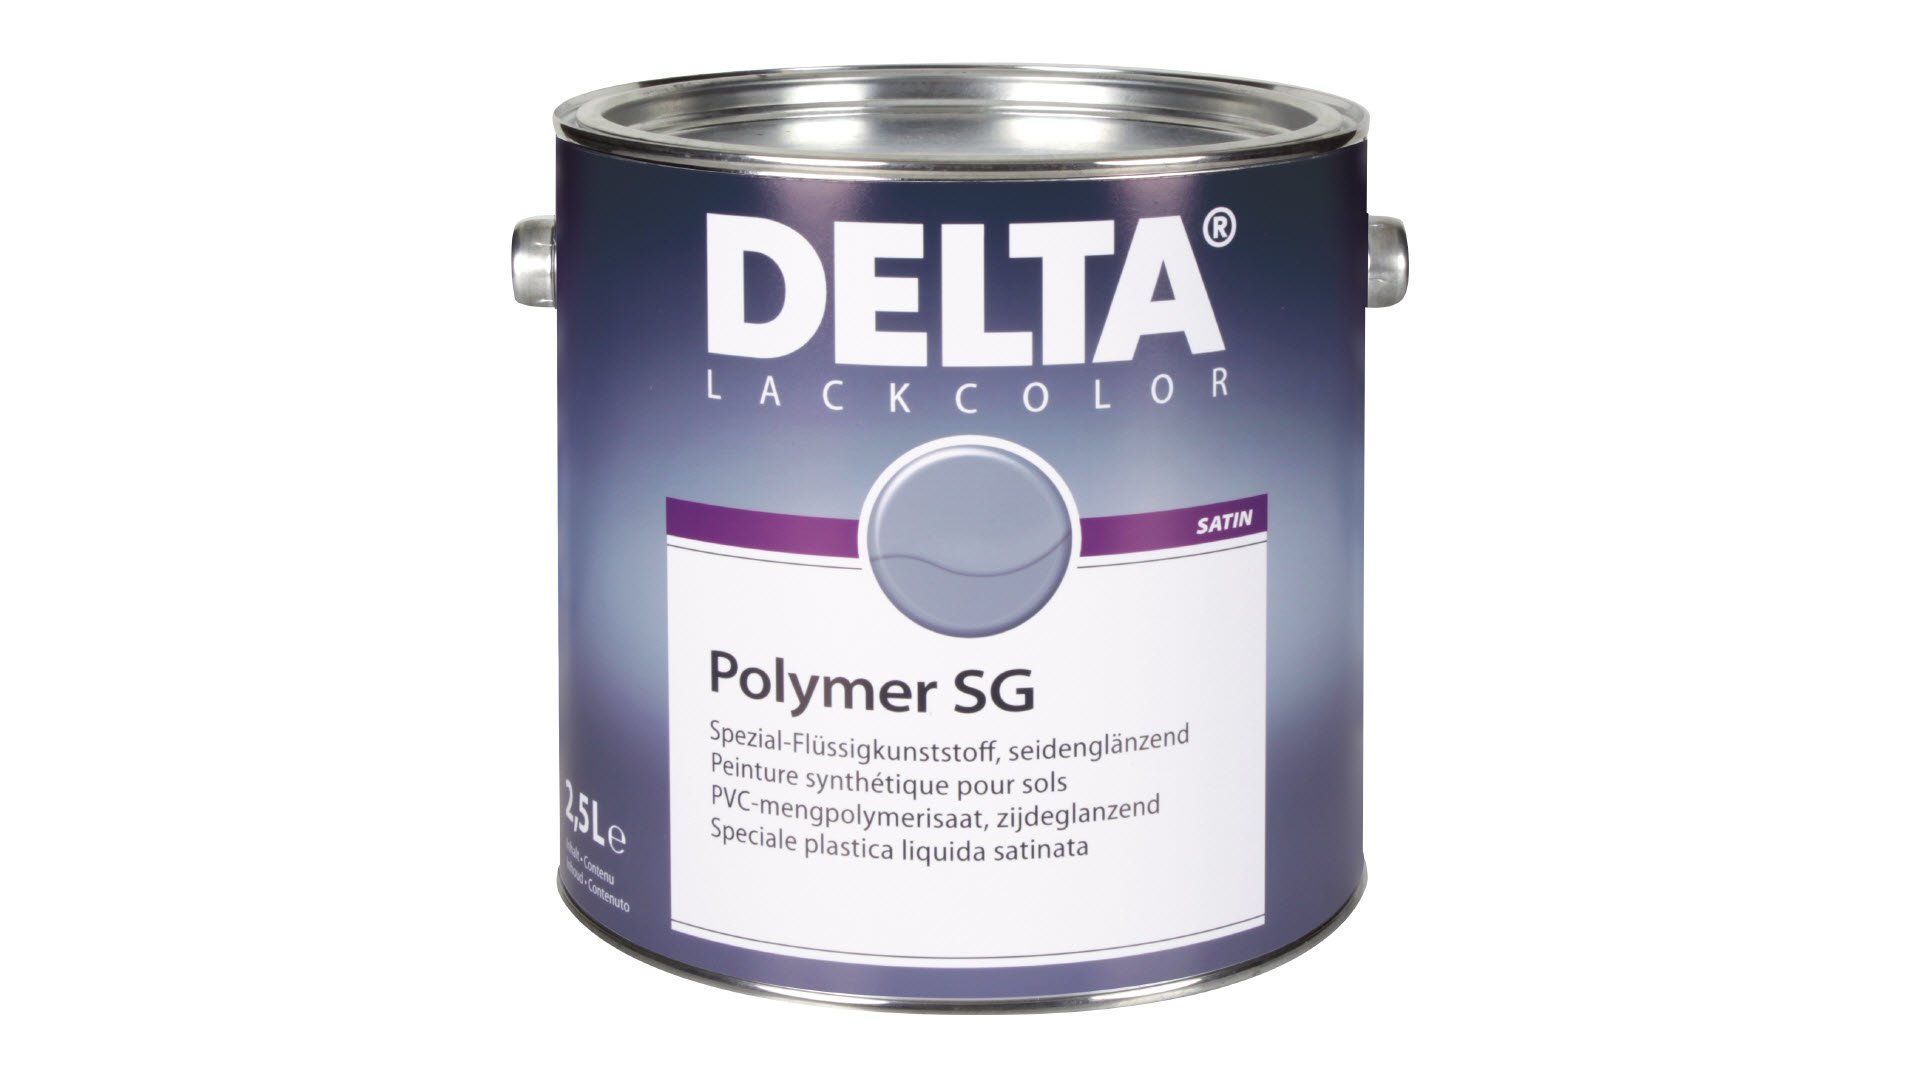 delta-polymer-sg